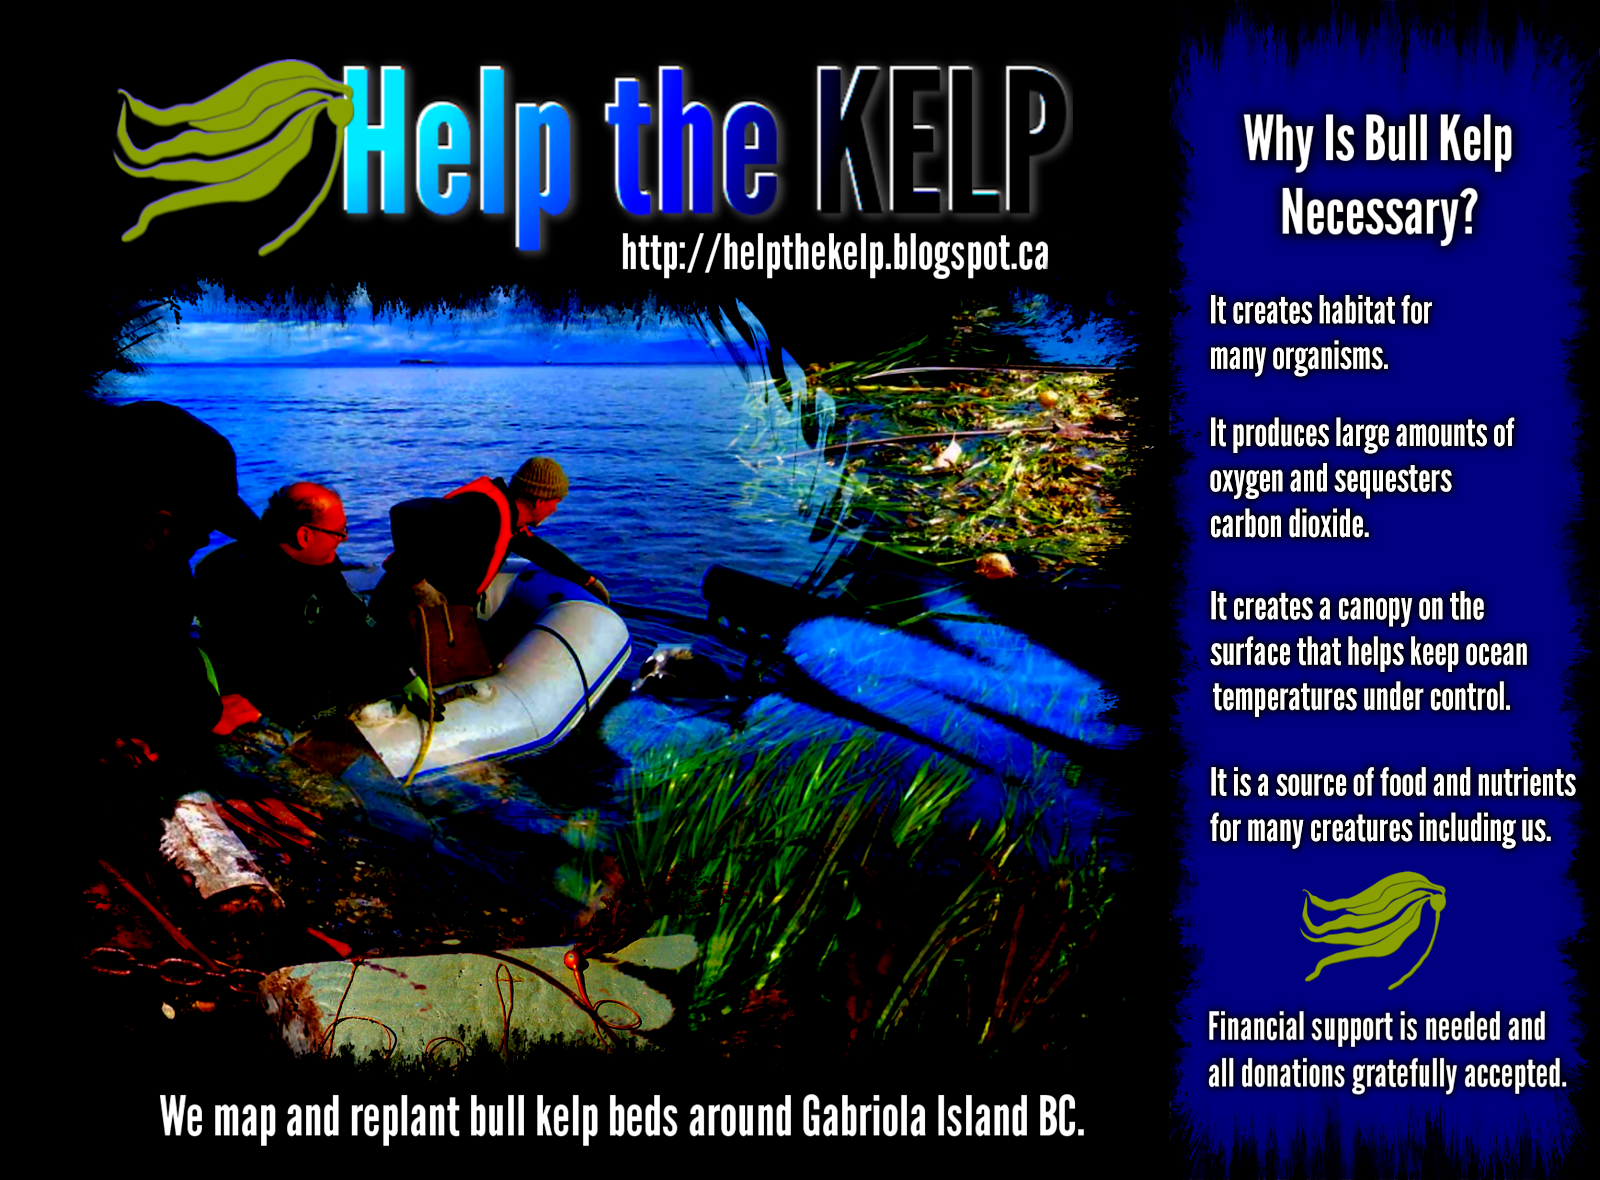 Why is bull kelp necessary?